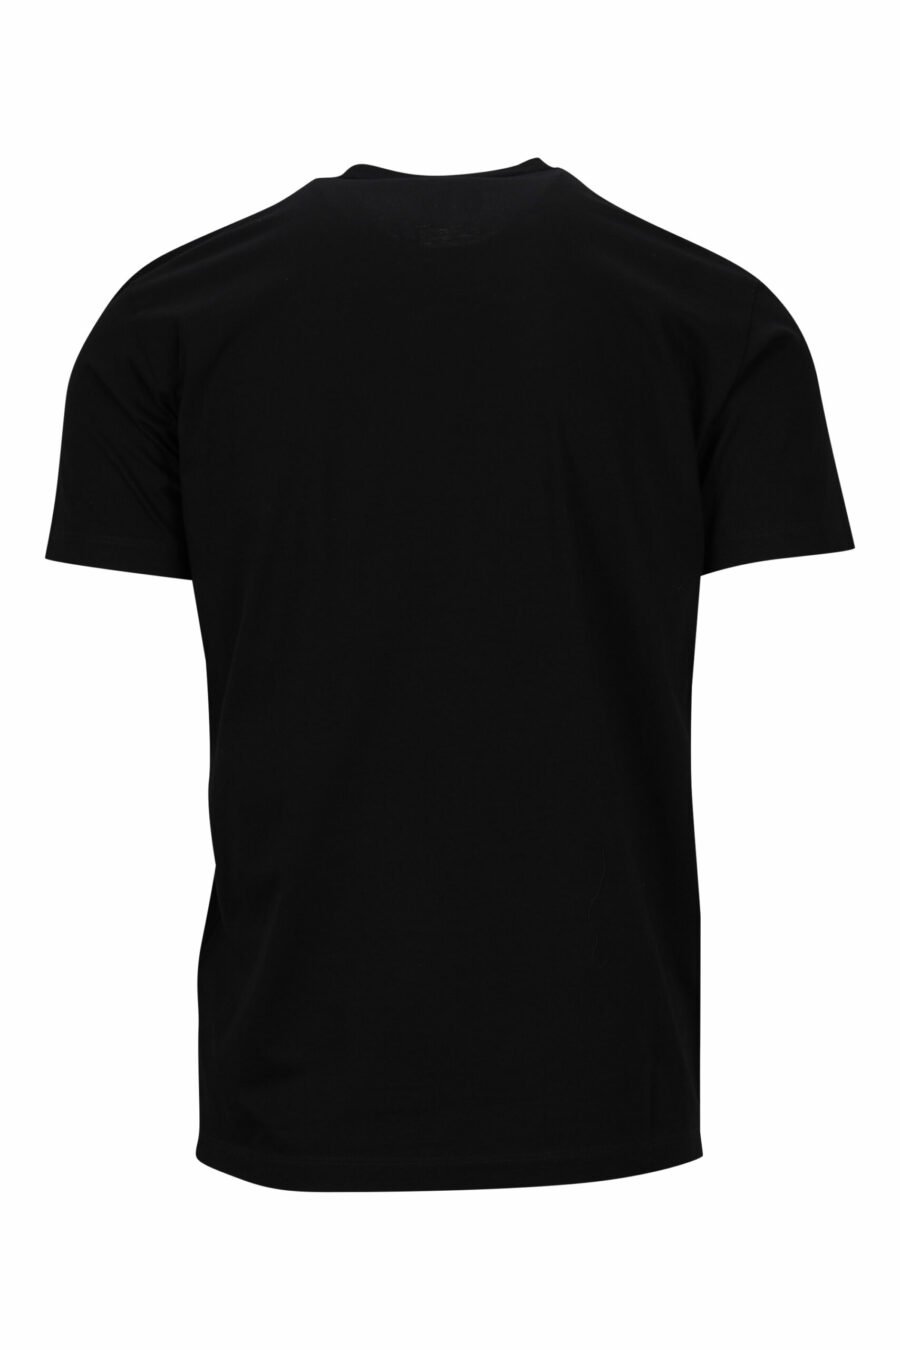 Black T-shirt with maxilogo "icon" doodles - 8054148362898 1 scaled